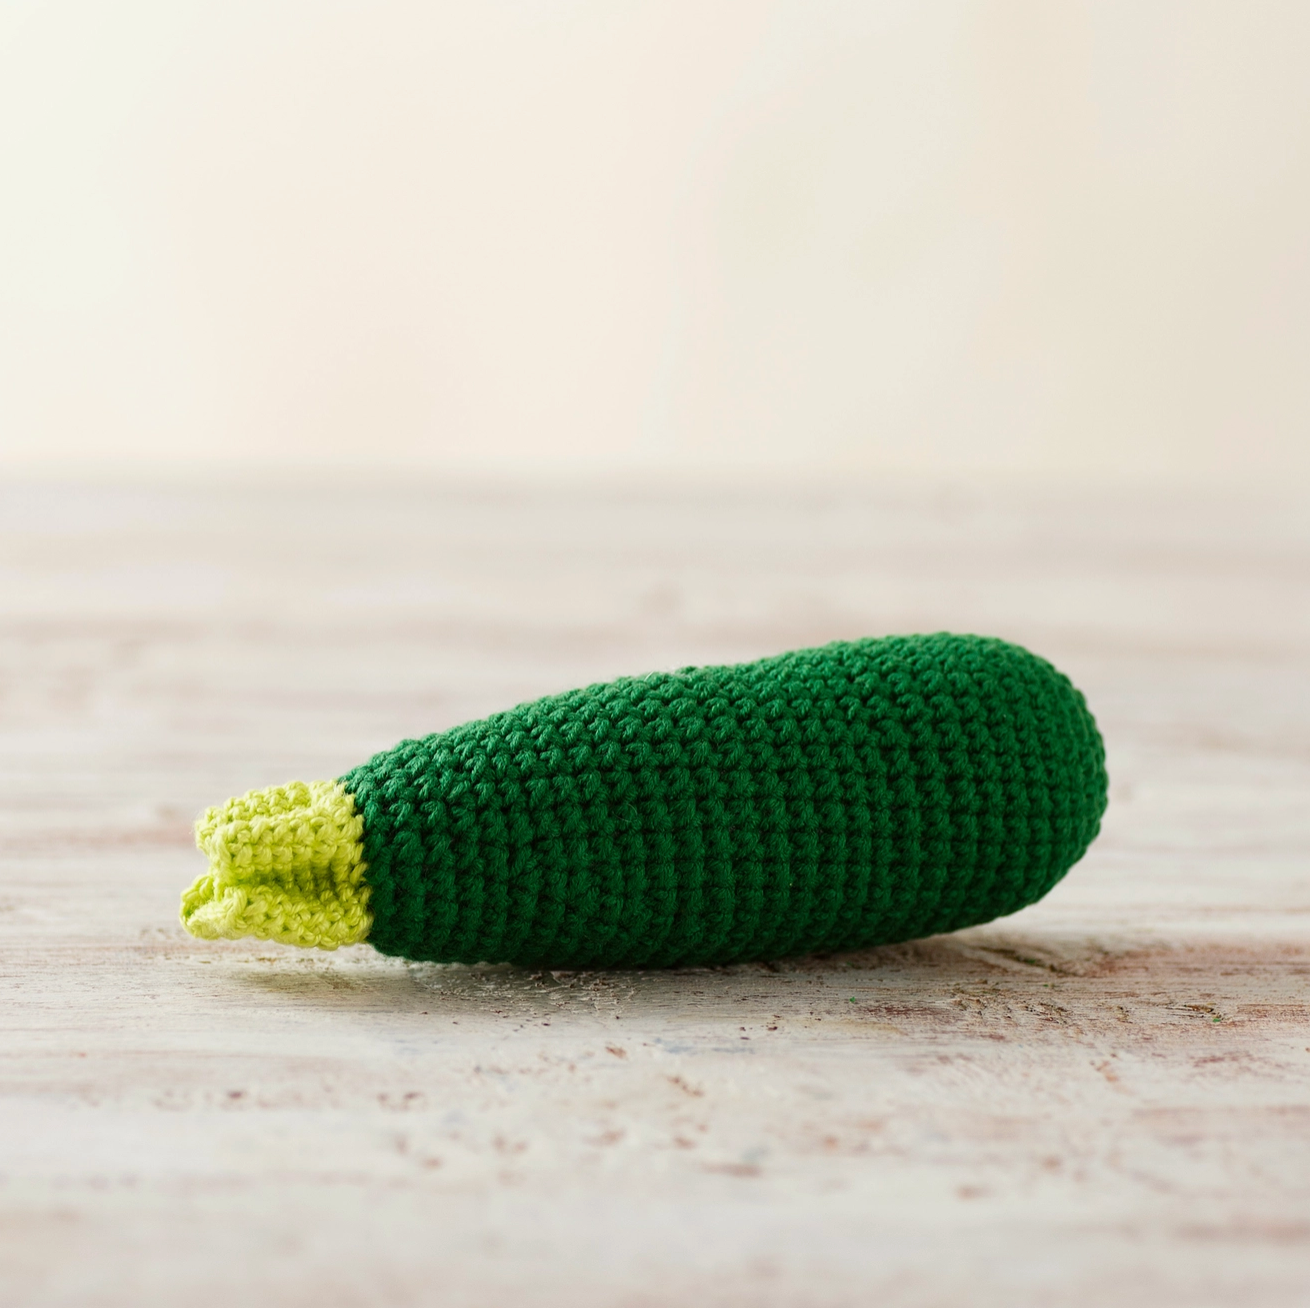 Crochet Play Food: Zucchini